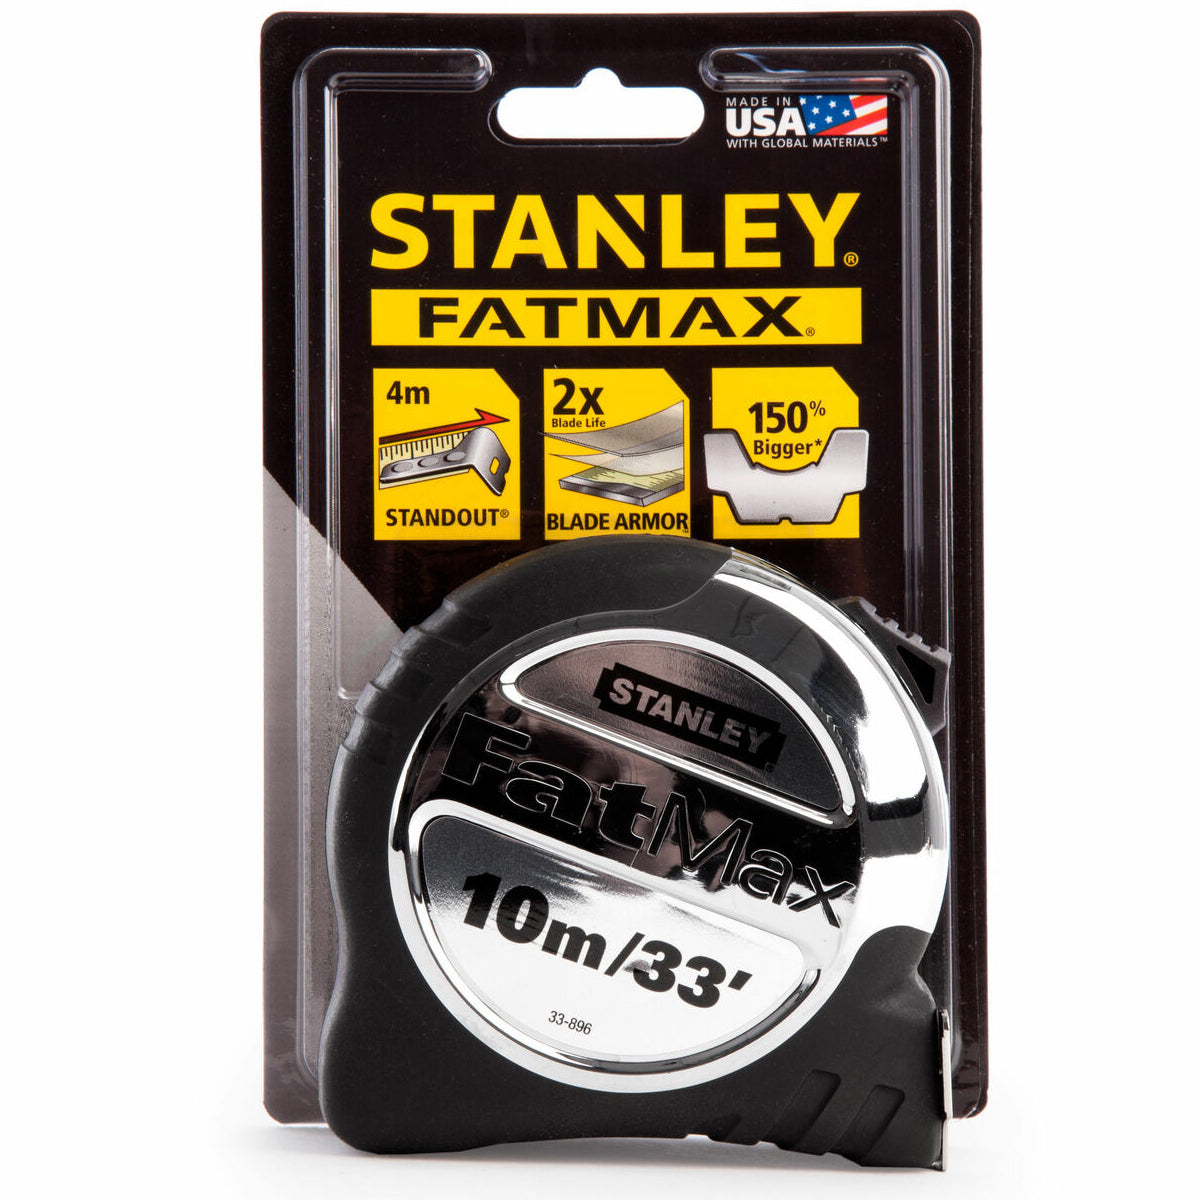 Stanley 5-33-886 FatMax Pro Pocket Tape Measure 5m/16ft STA533886